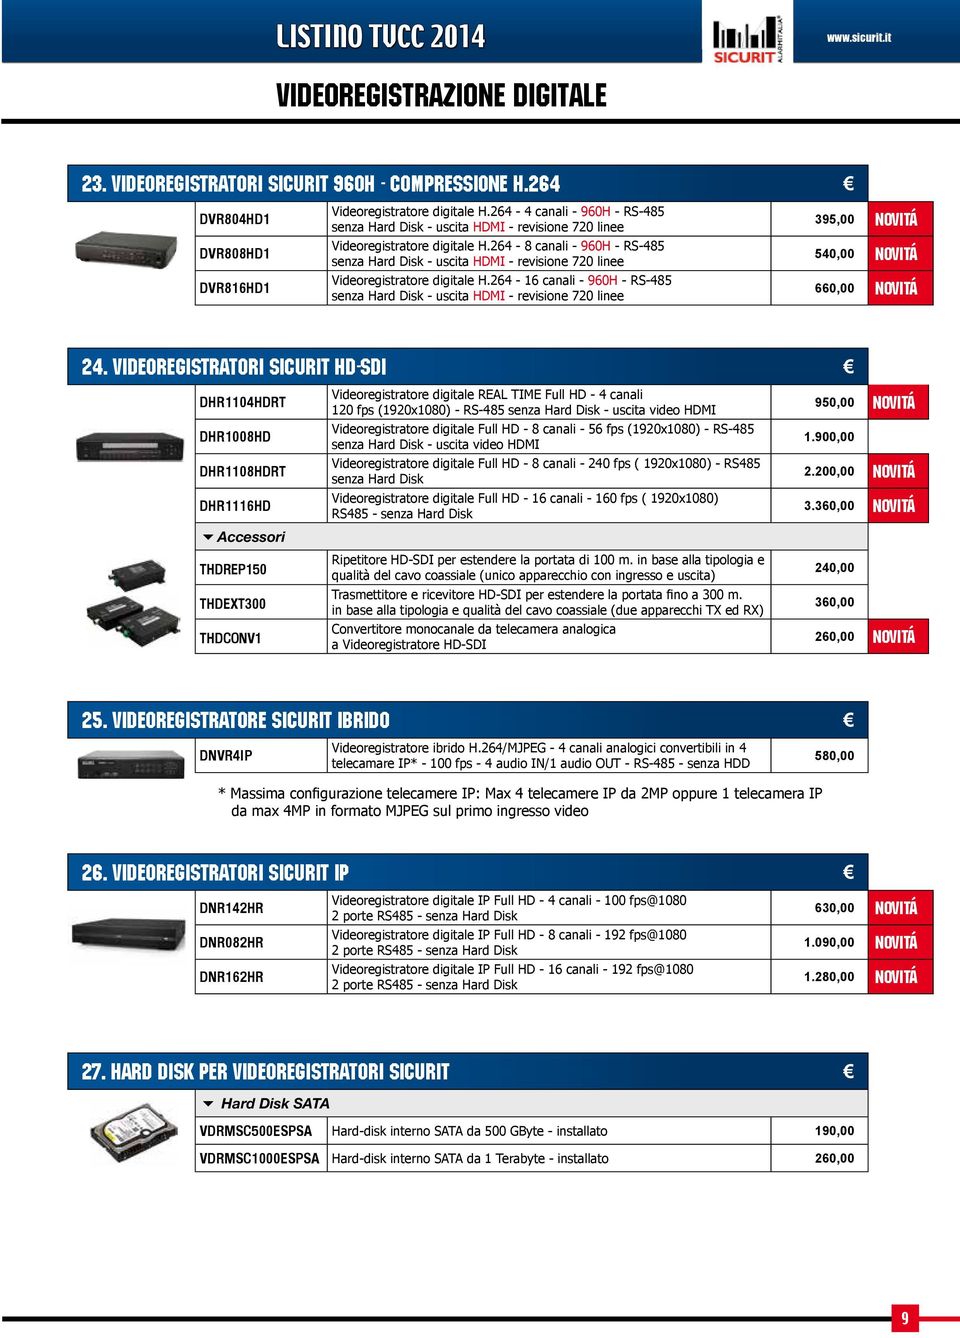 264-8 canali - 960H - RS-485 senza Hard Disk - uscita HDMI - revisione 720 linee Videoregistratore digitale H.